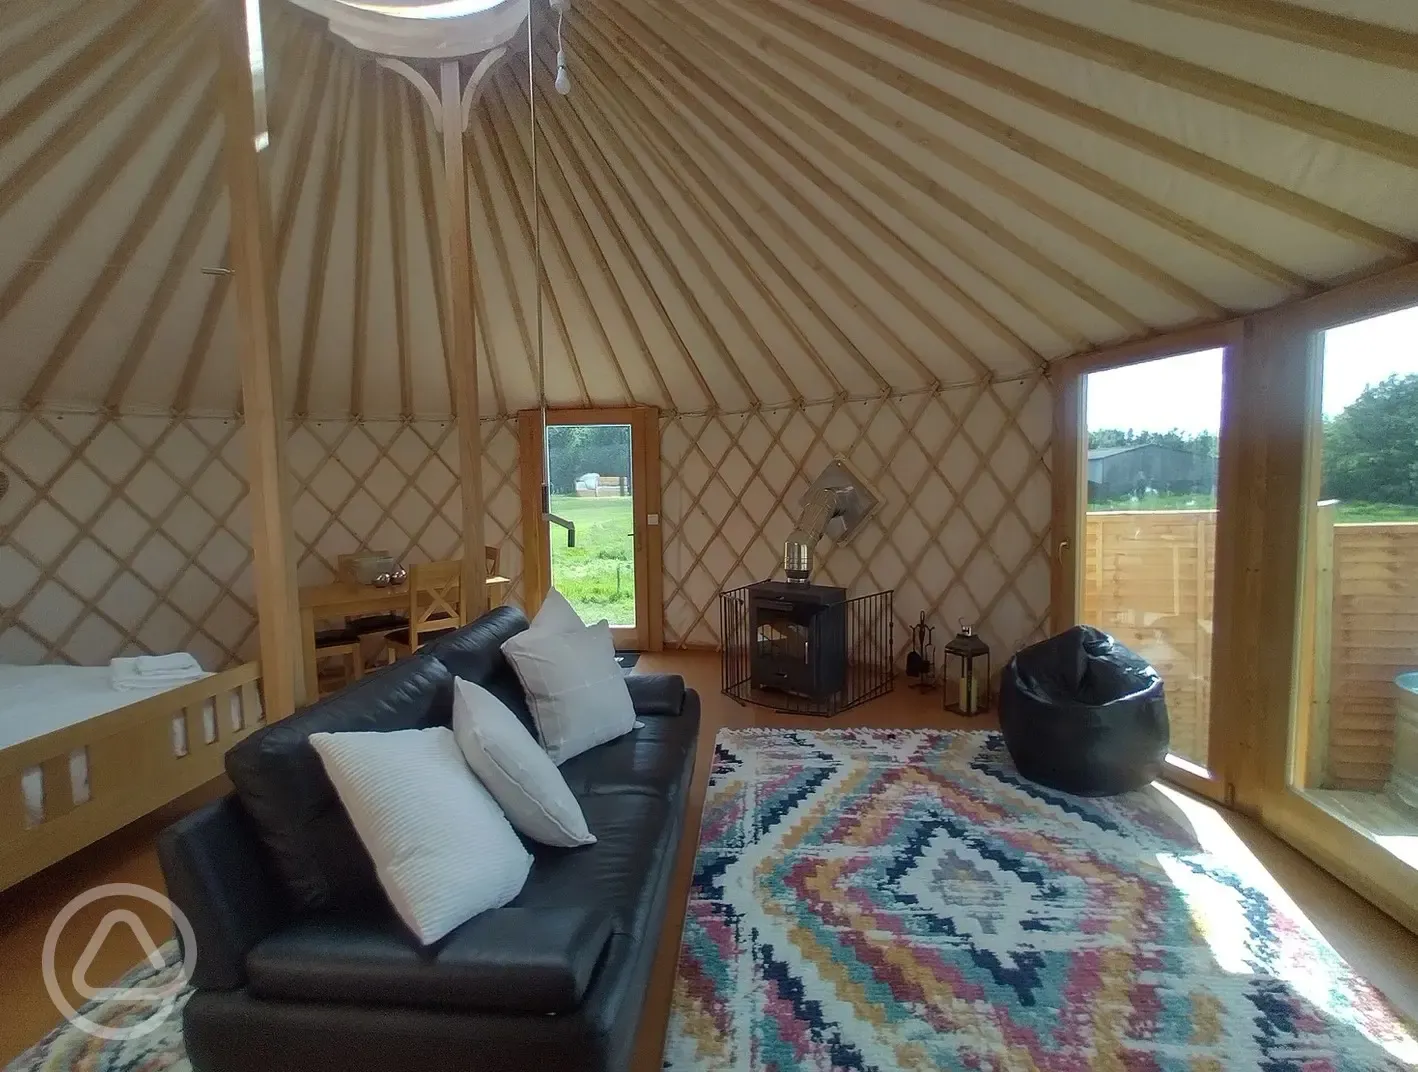 Luxury European yurt interior